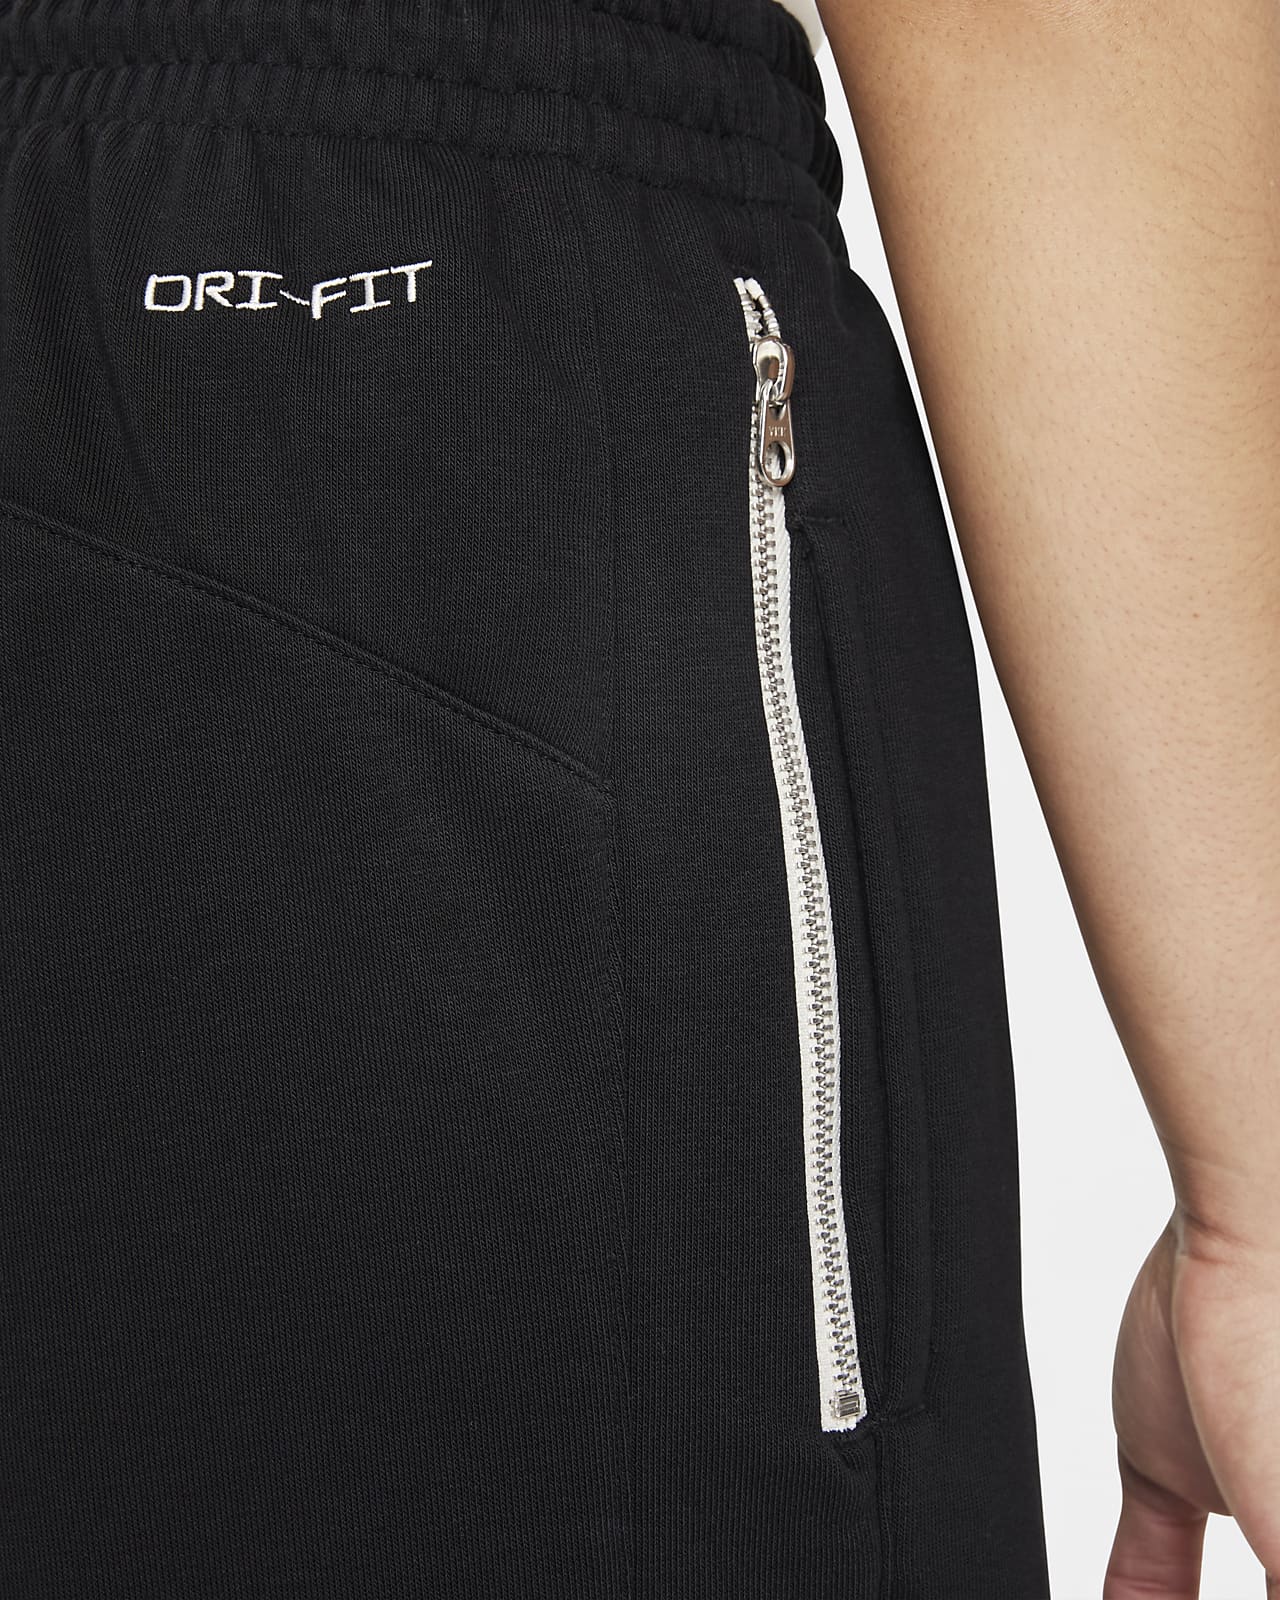 Nike Dri Fit Training Pants Womens Size Small Black 100% Polyester 2 Pockets